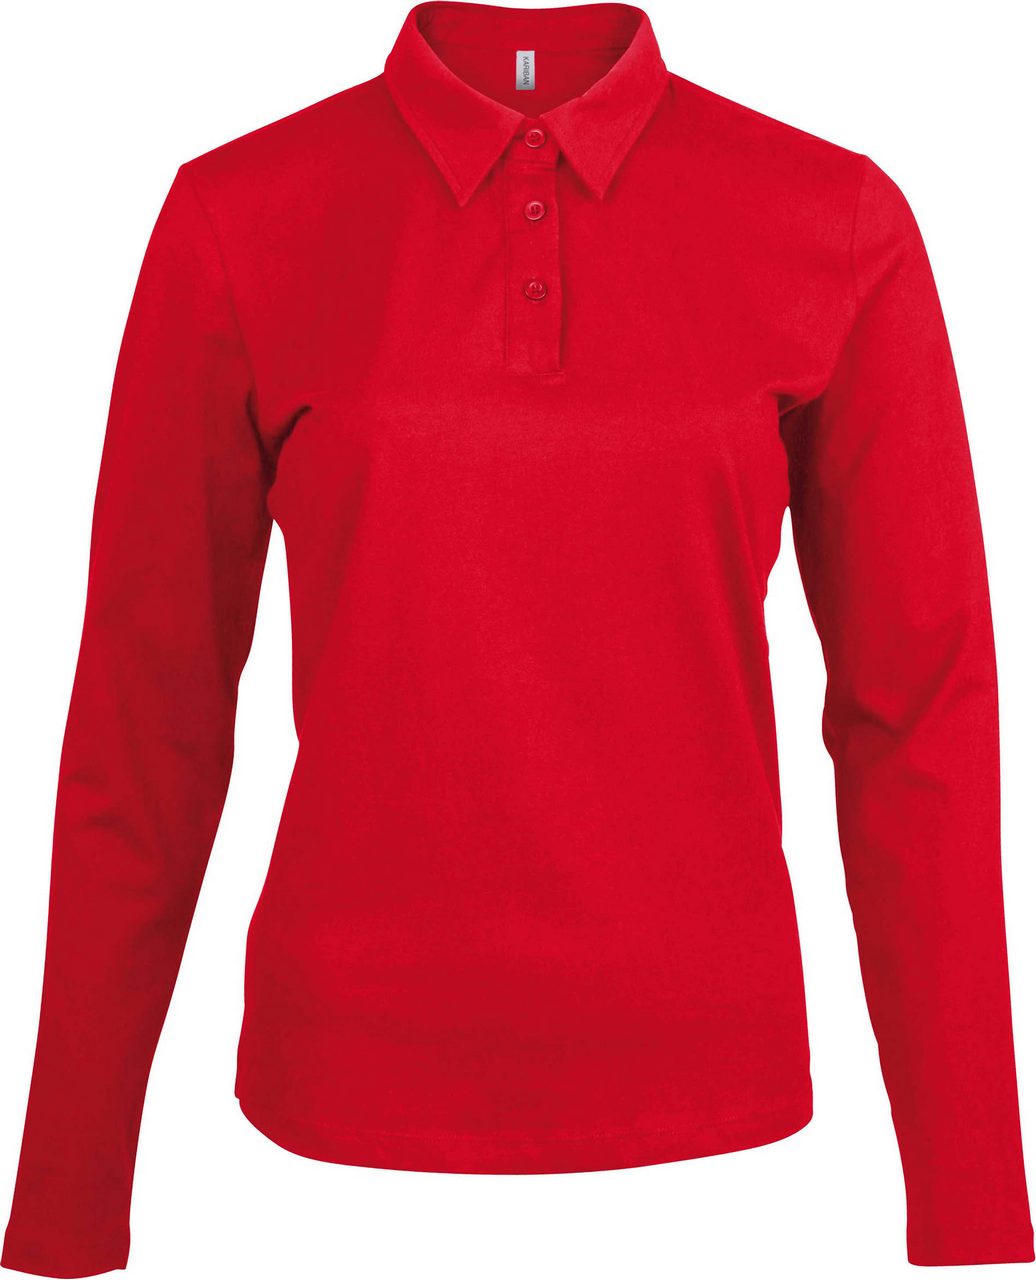 LADIES1, ženska polo majica s dugim rukavima s tiskom (opcija) 